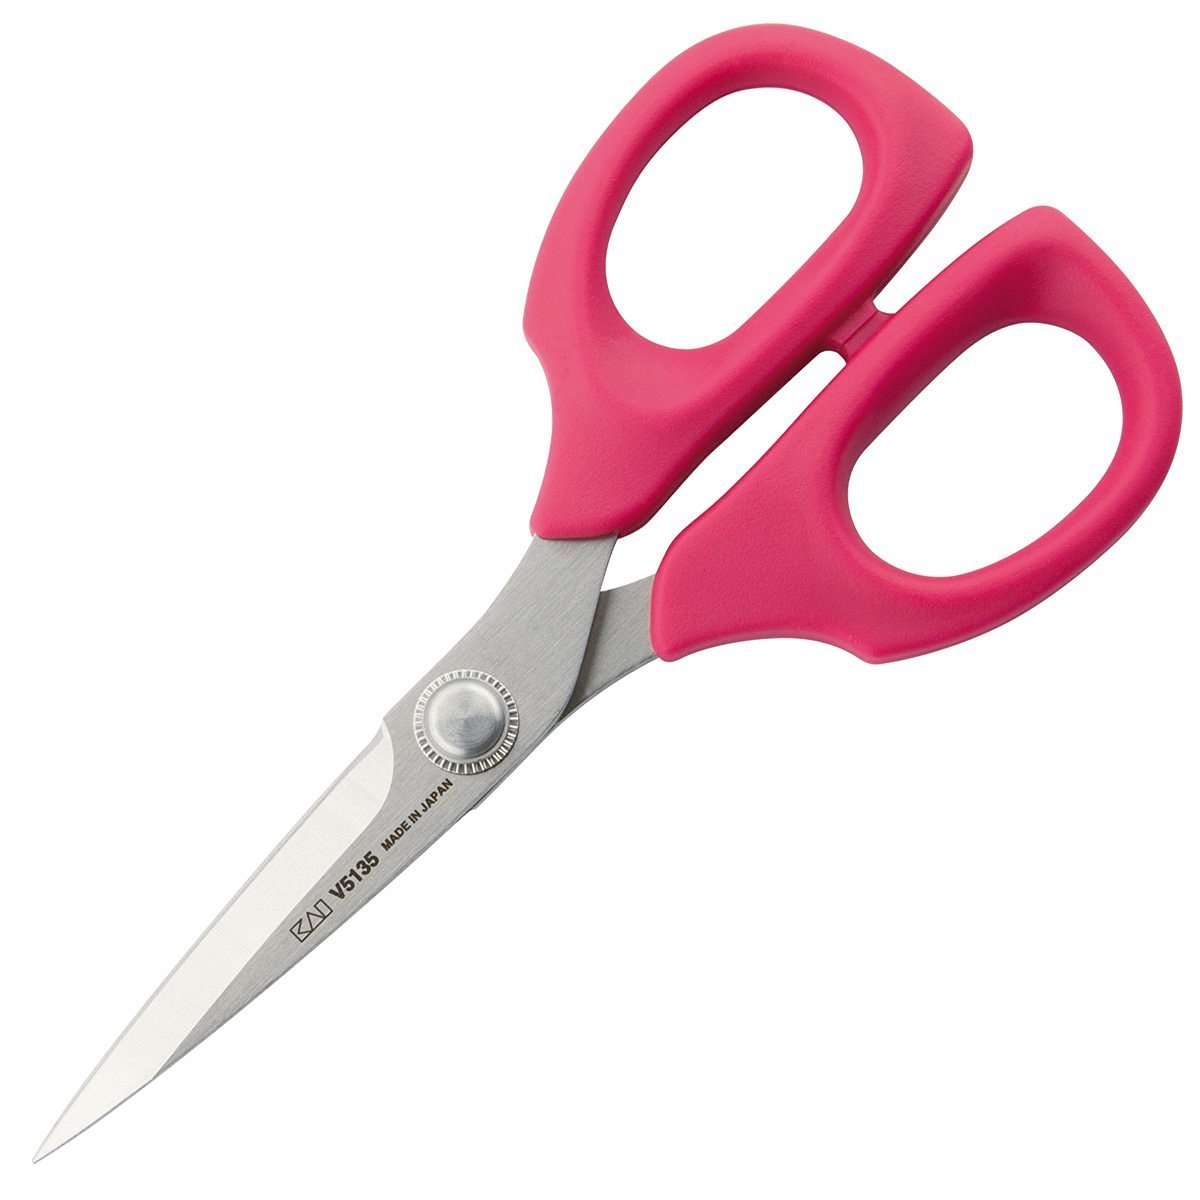 kai V5135P V5000 Edition Multi-Purpose Scissors with Protective Cap 13.5 cm Pink